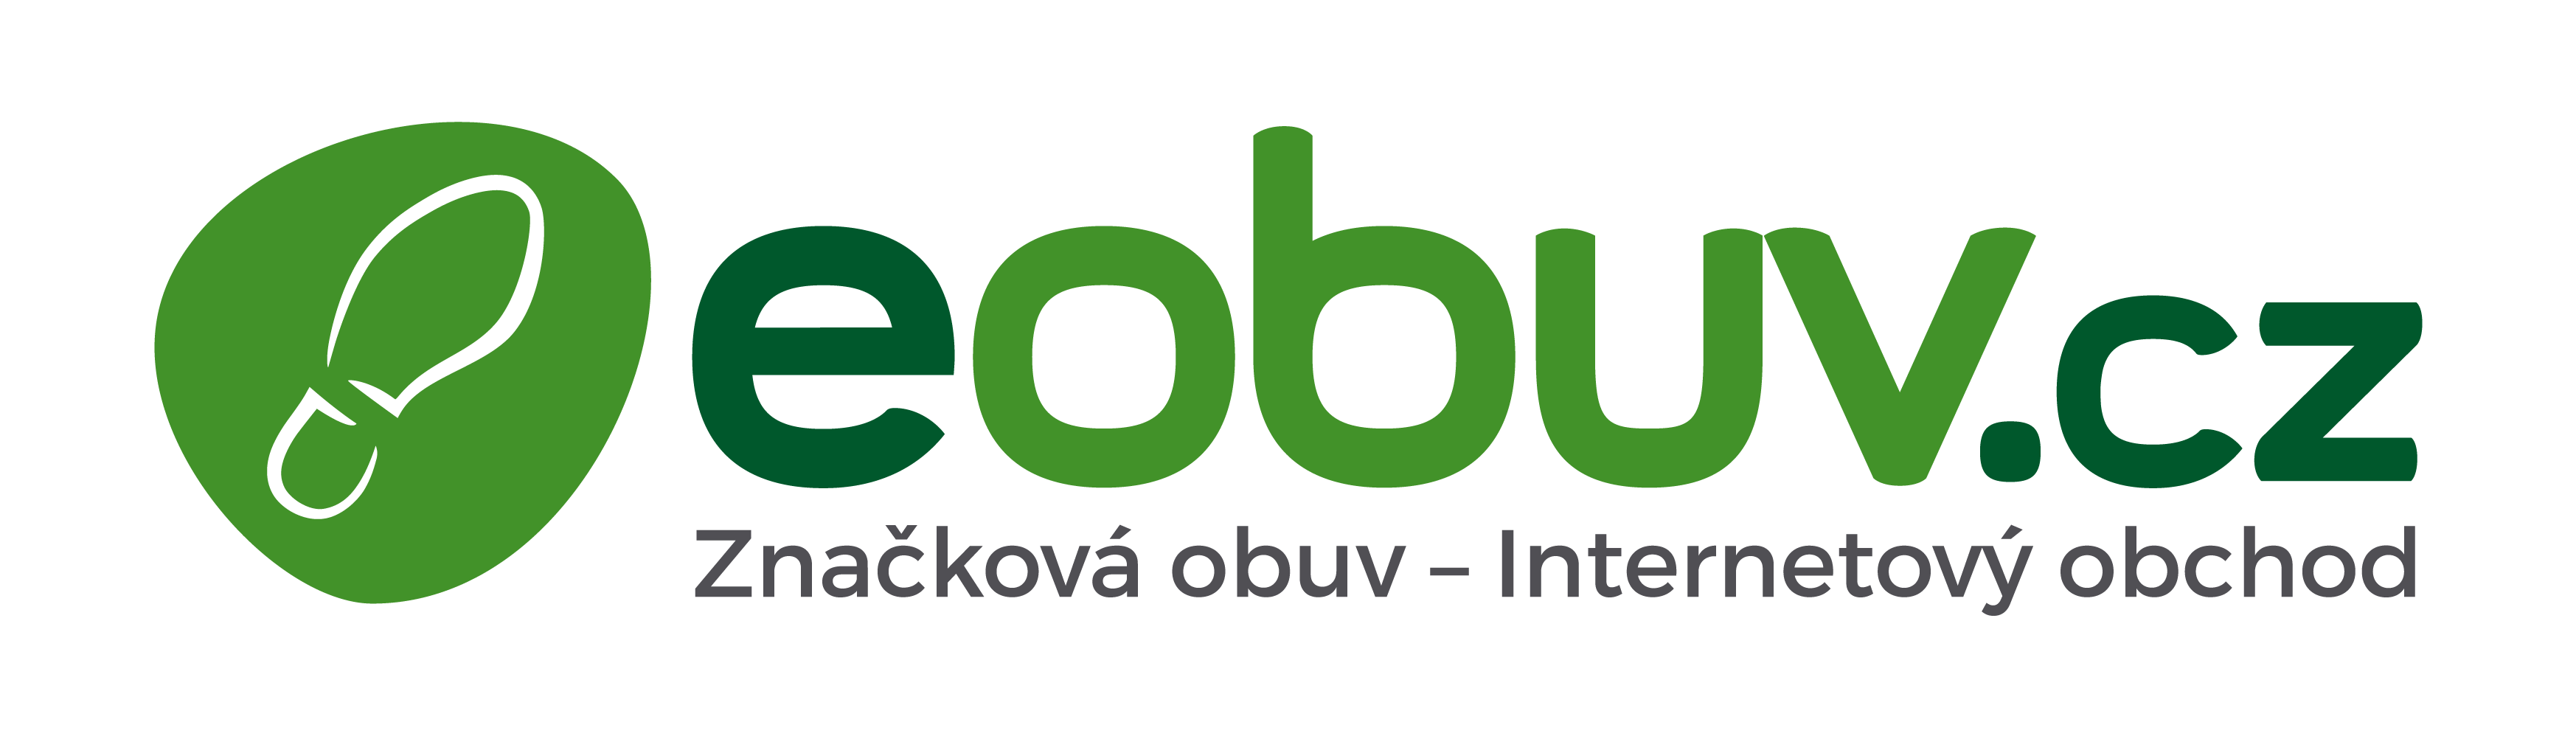 Eobuv.cz